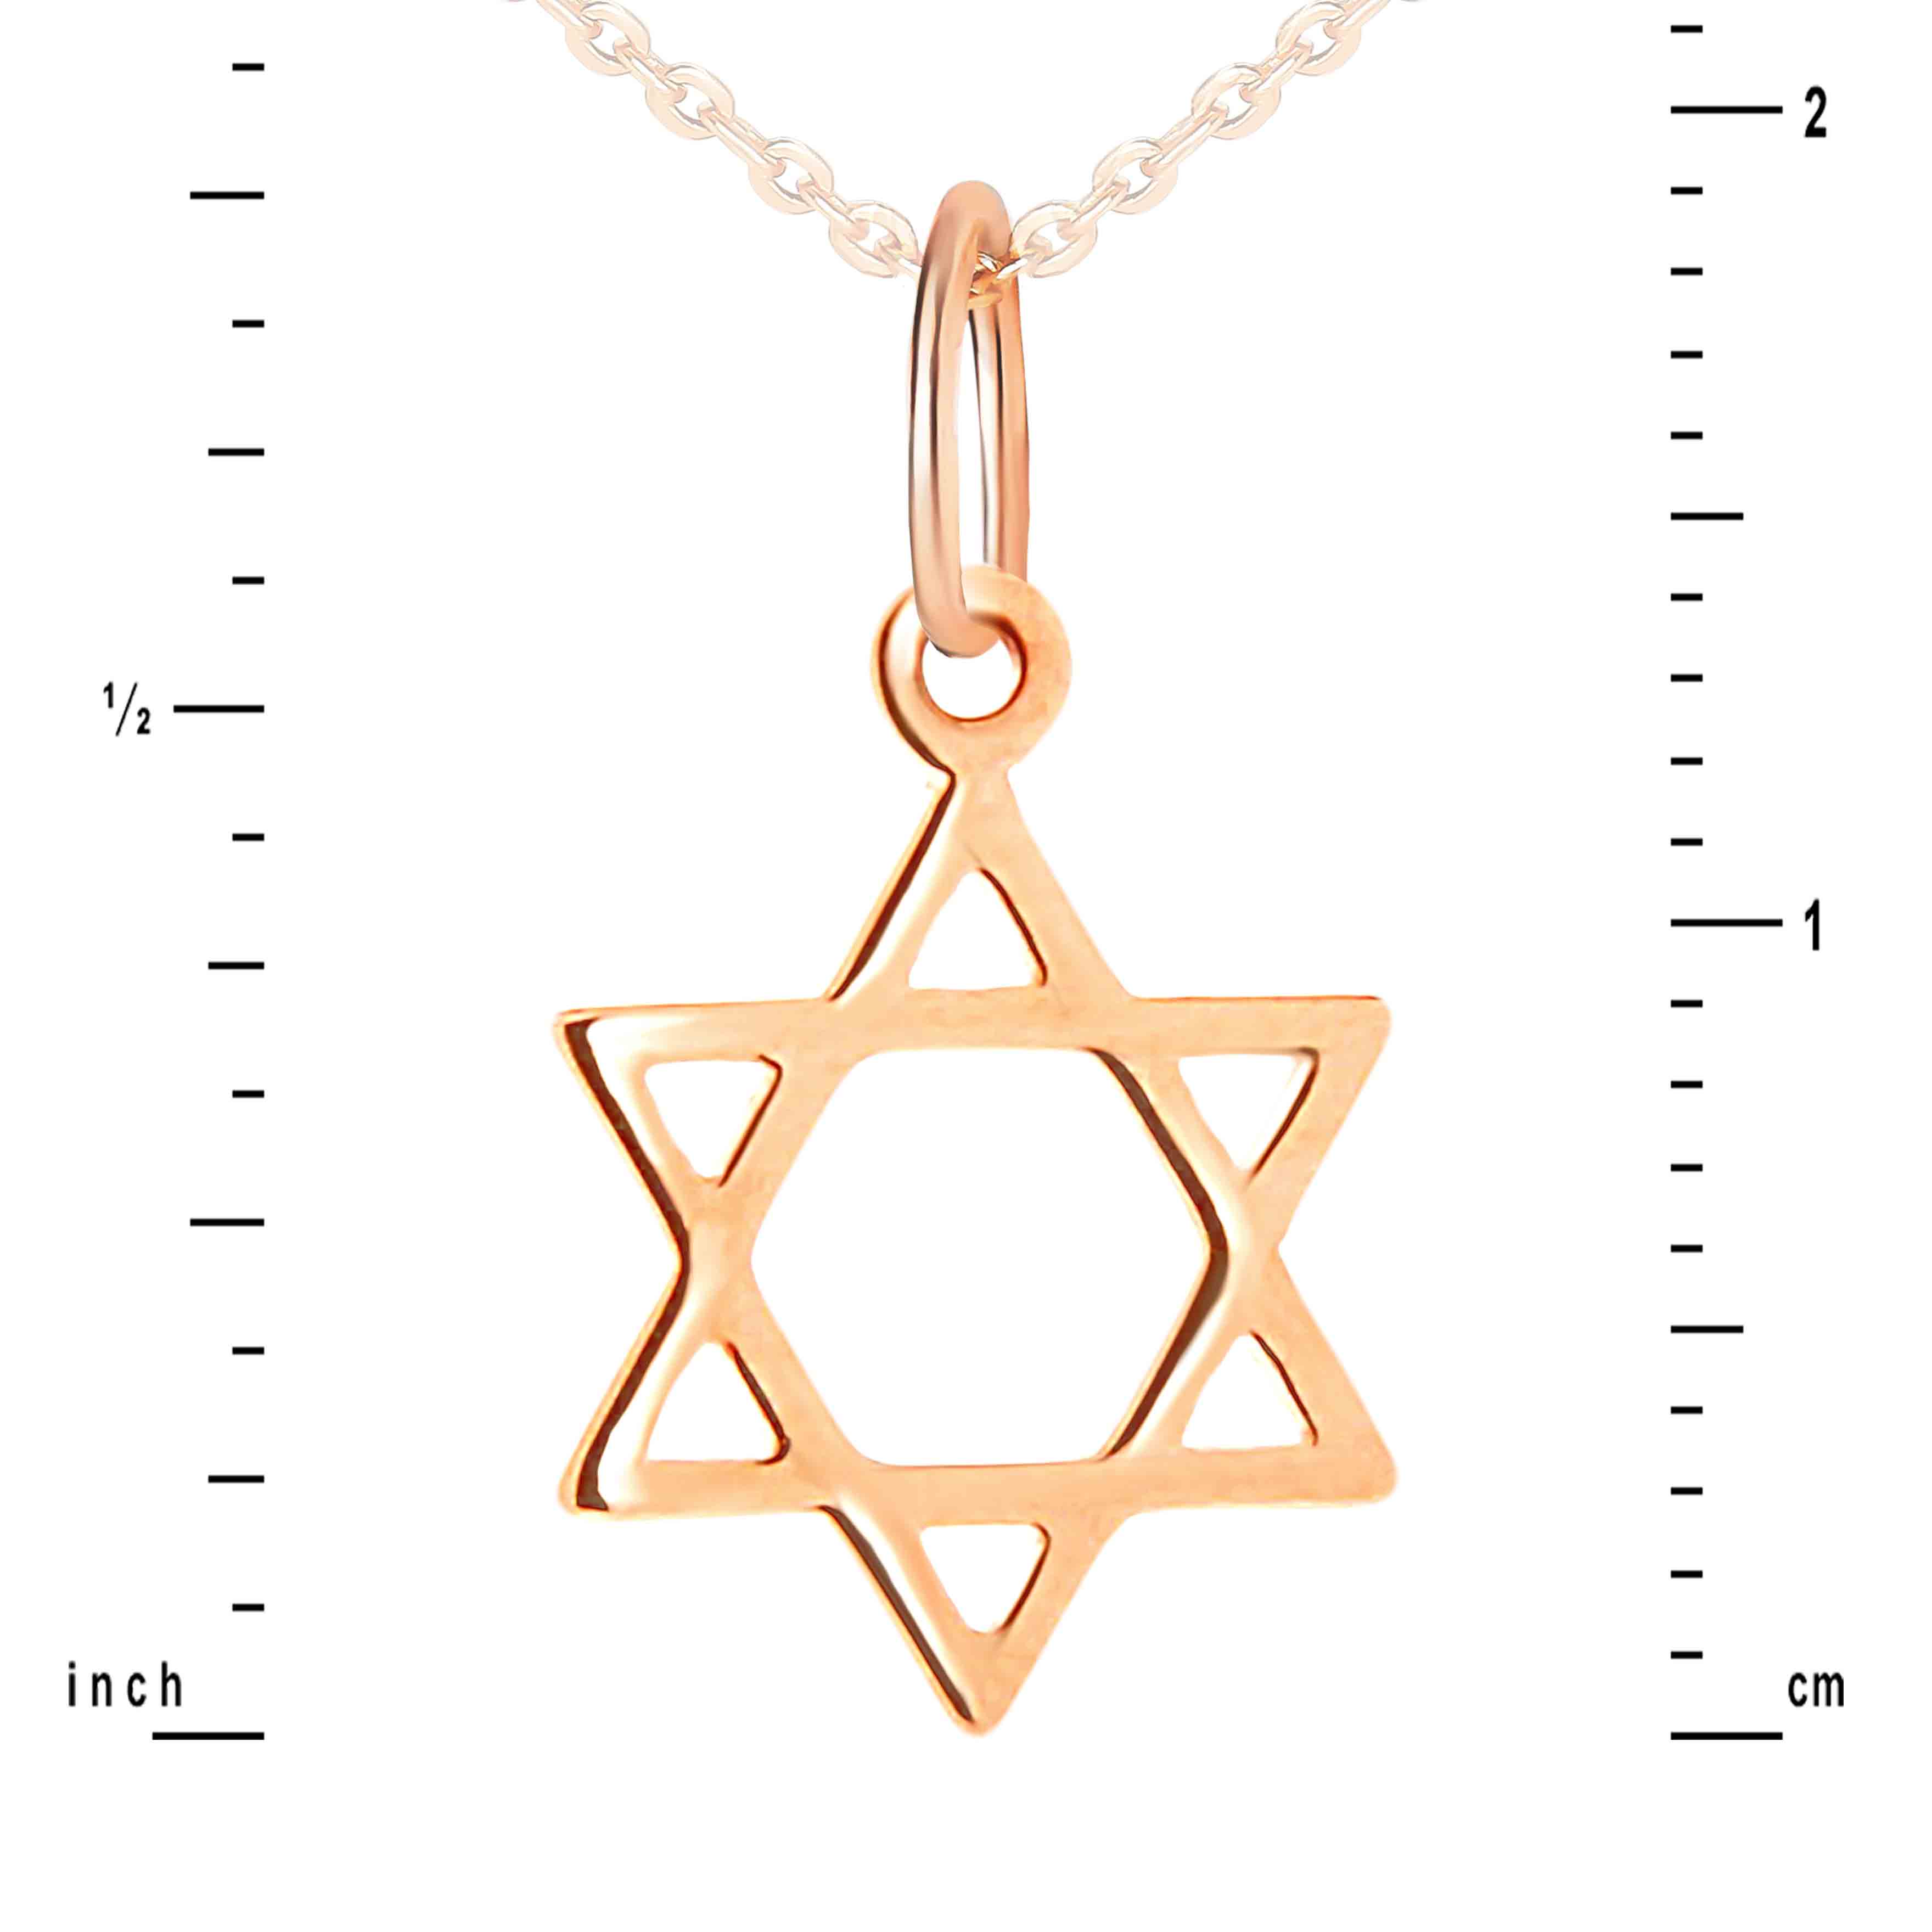 Jewish Star of David Necklace